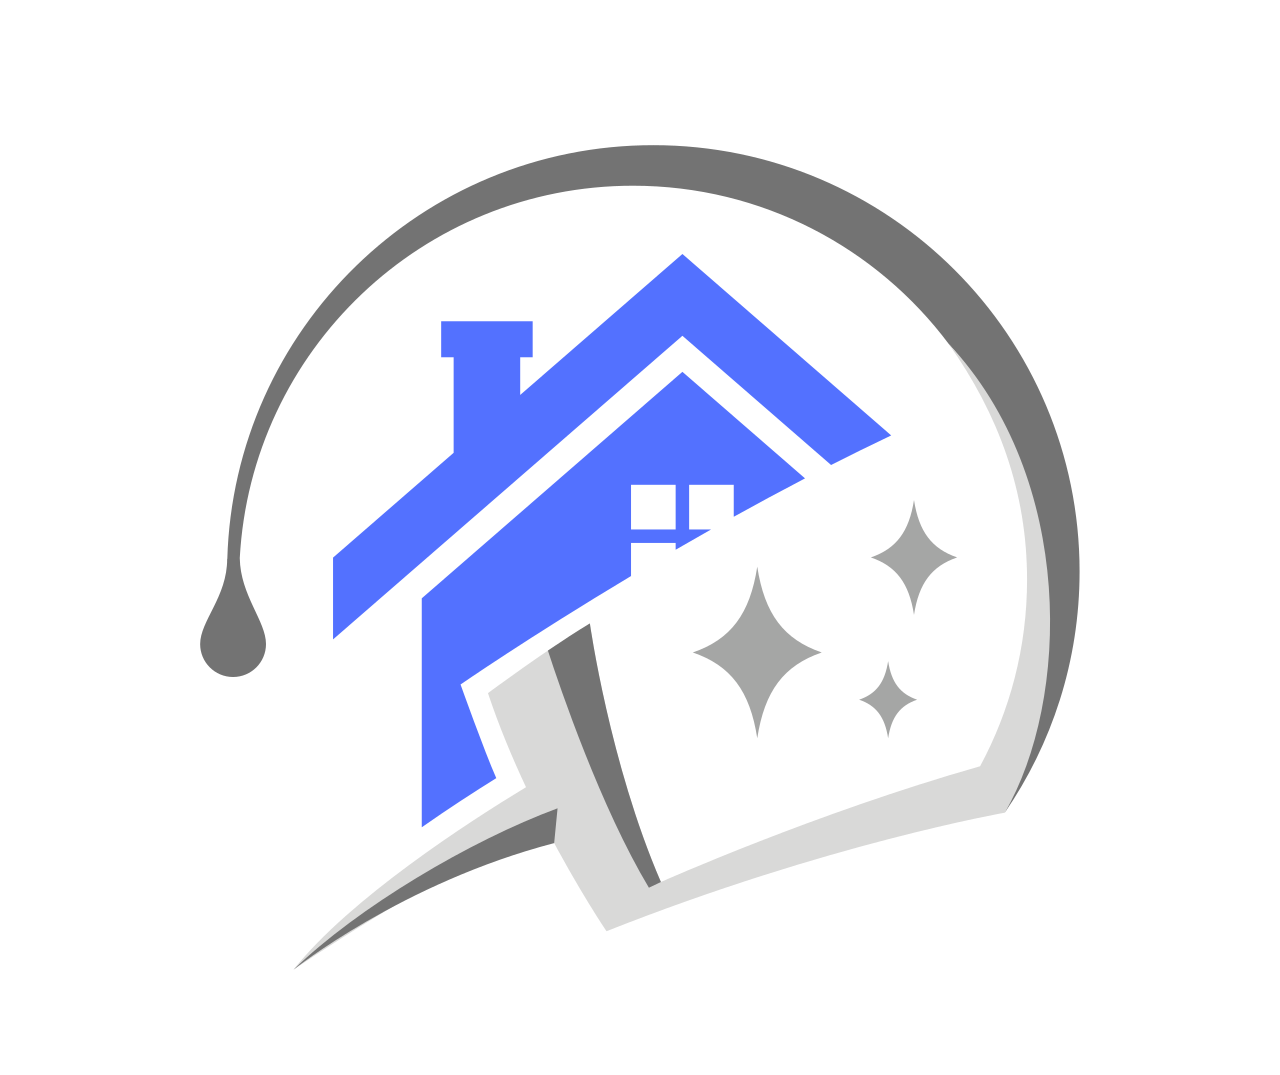 GUARDIAN GLARE SOLUTIONS 's logo